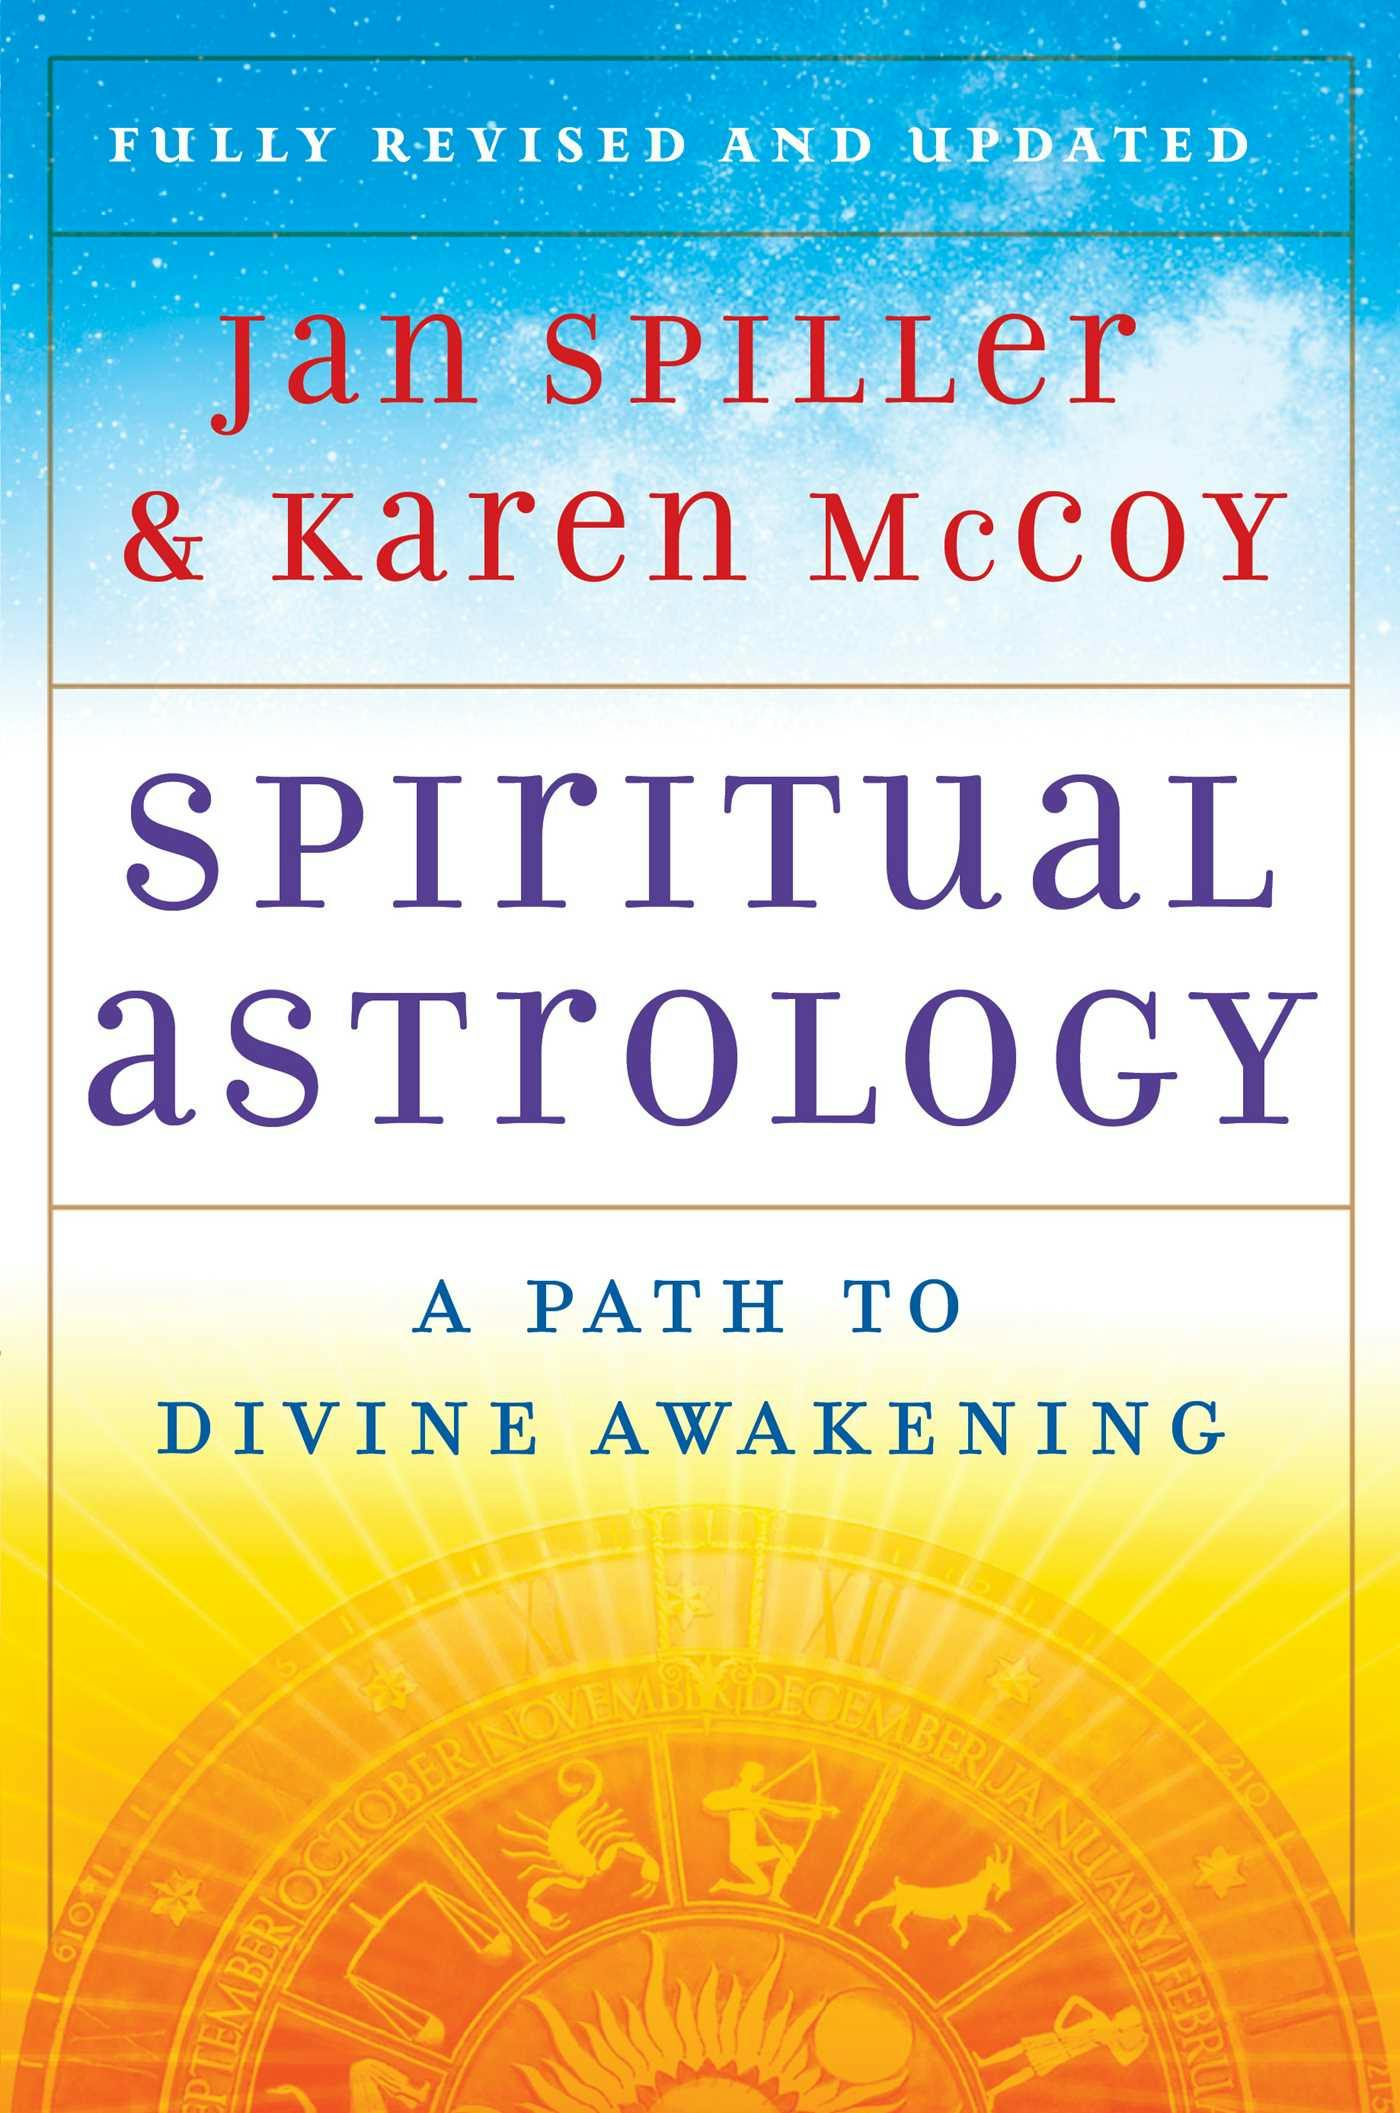 Spiritual Astrology: A Path to Divine Awakening - Karen McCoy, Jan Spiller